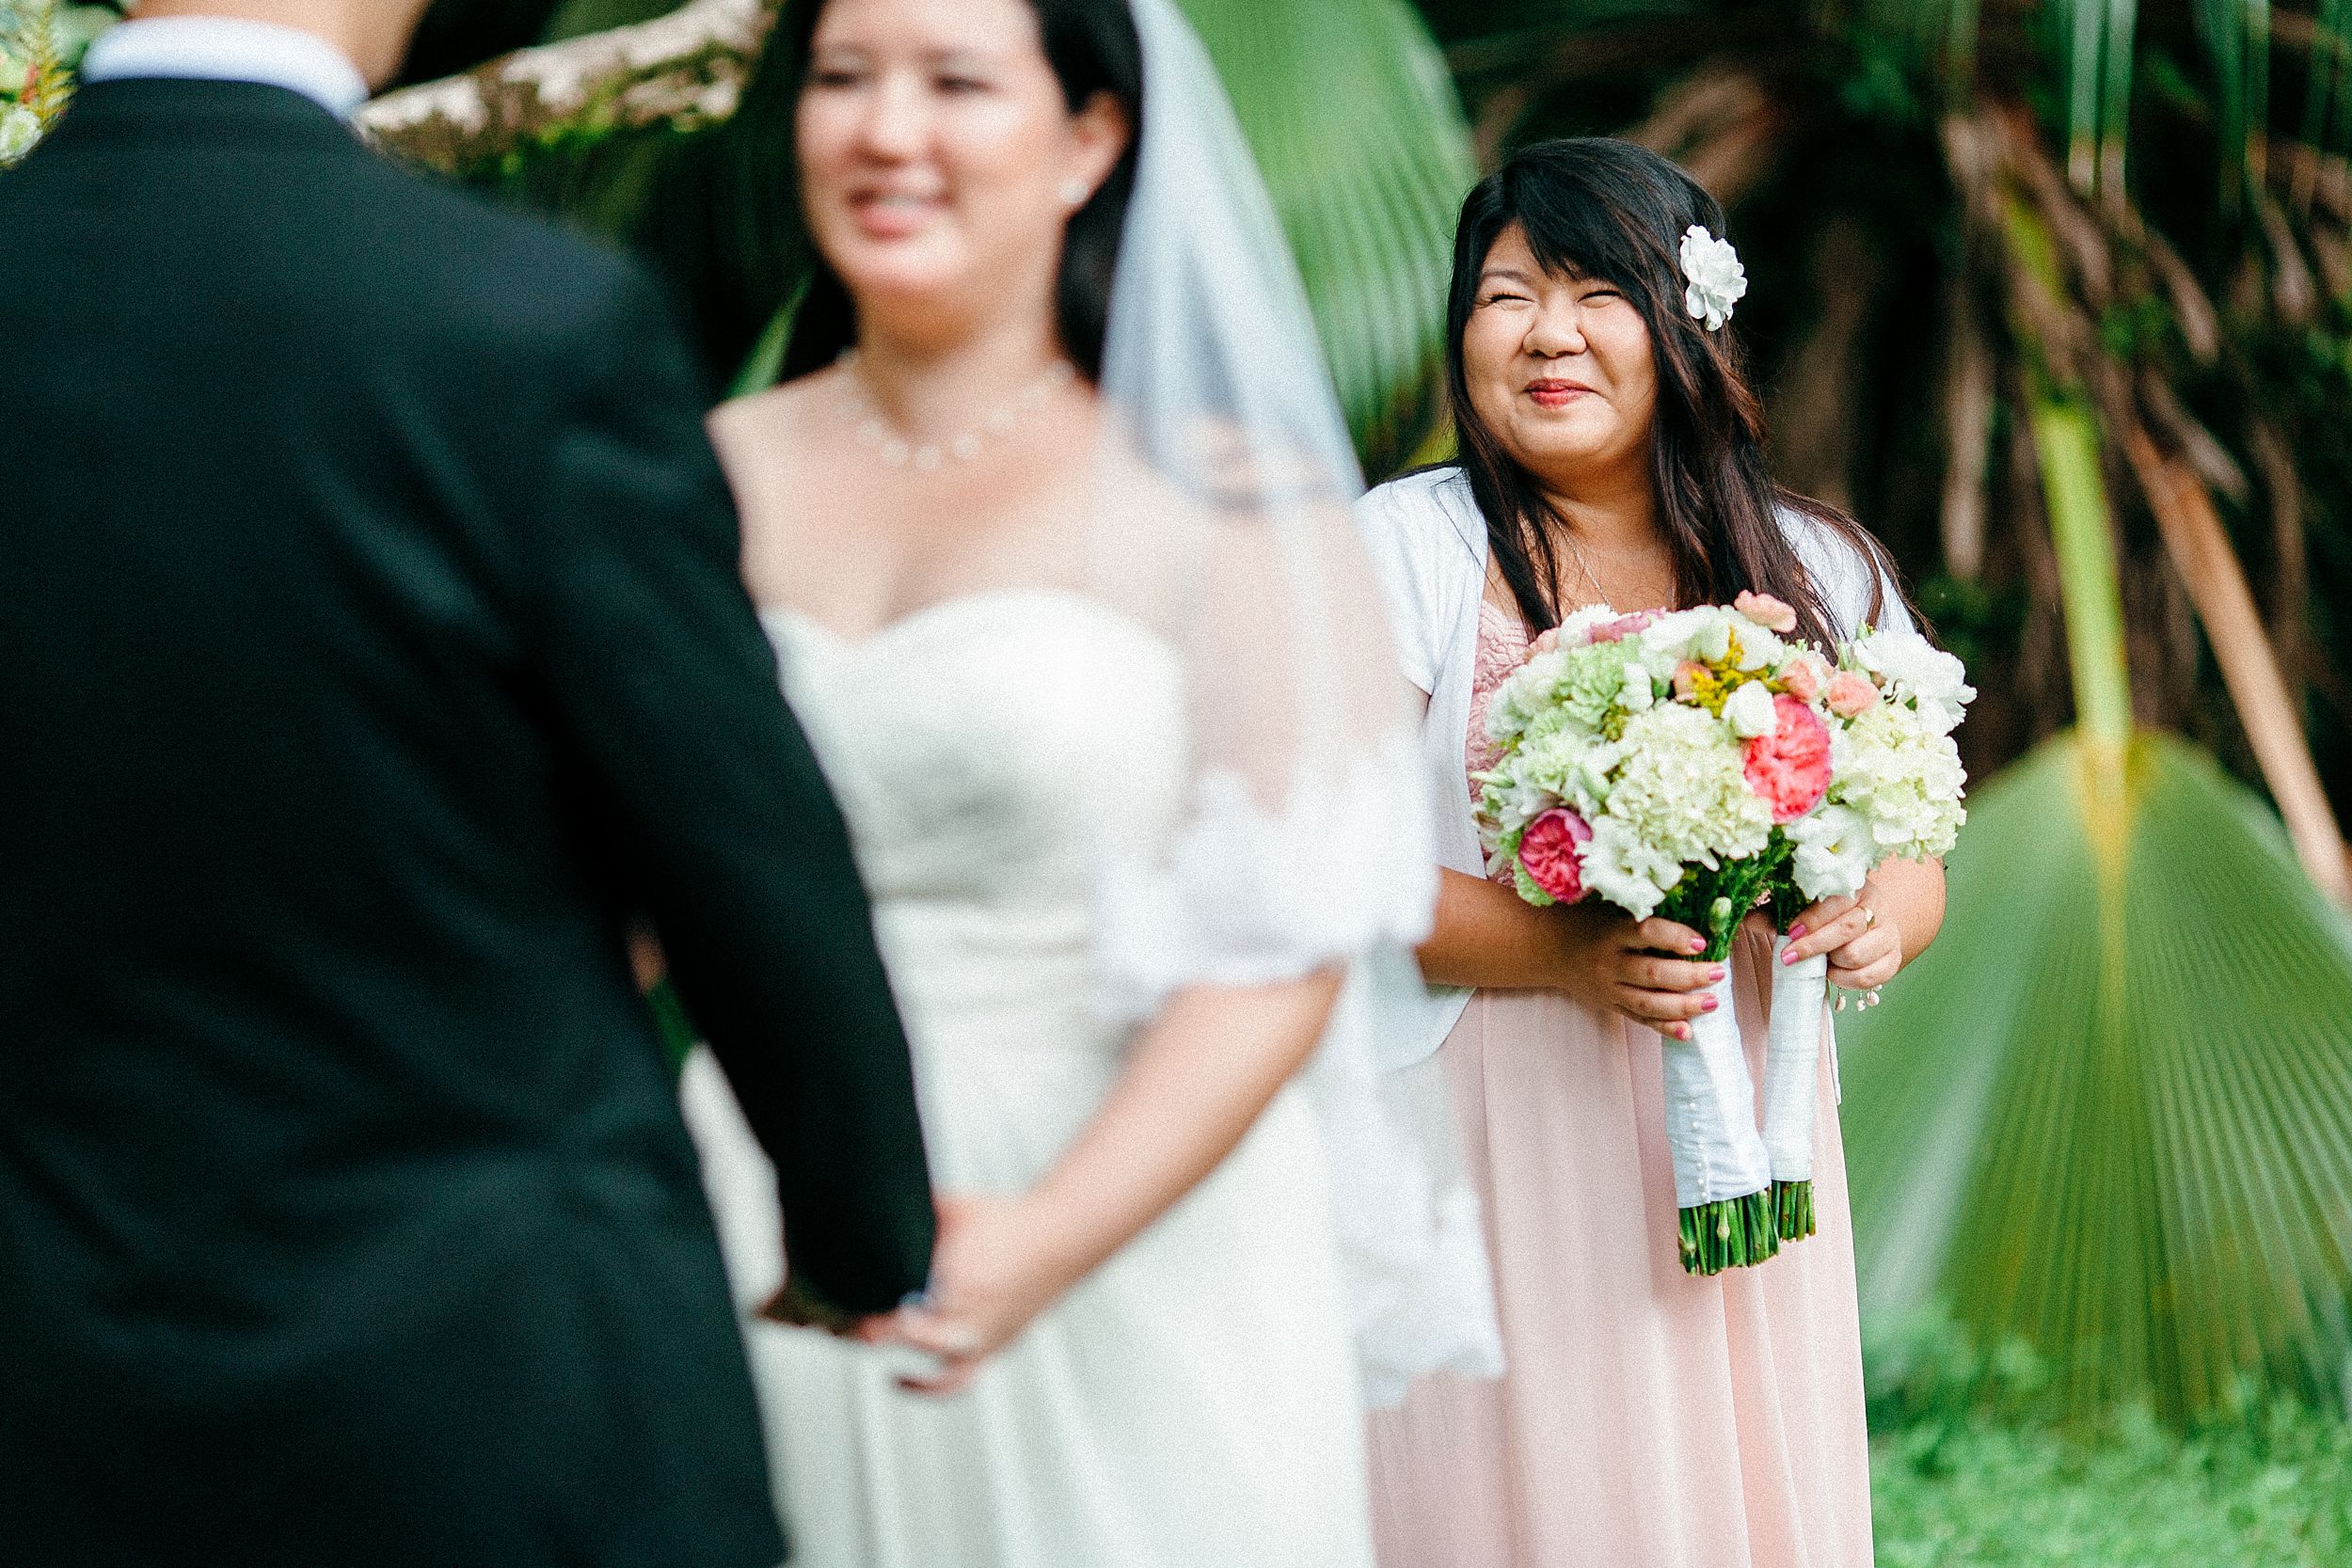  Ho'omaluhia Mountain Wedding - A Small Hawaii Elopement 